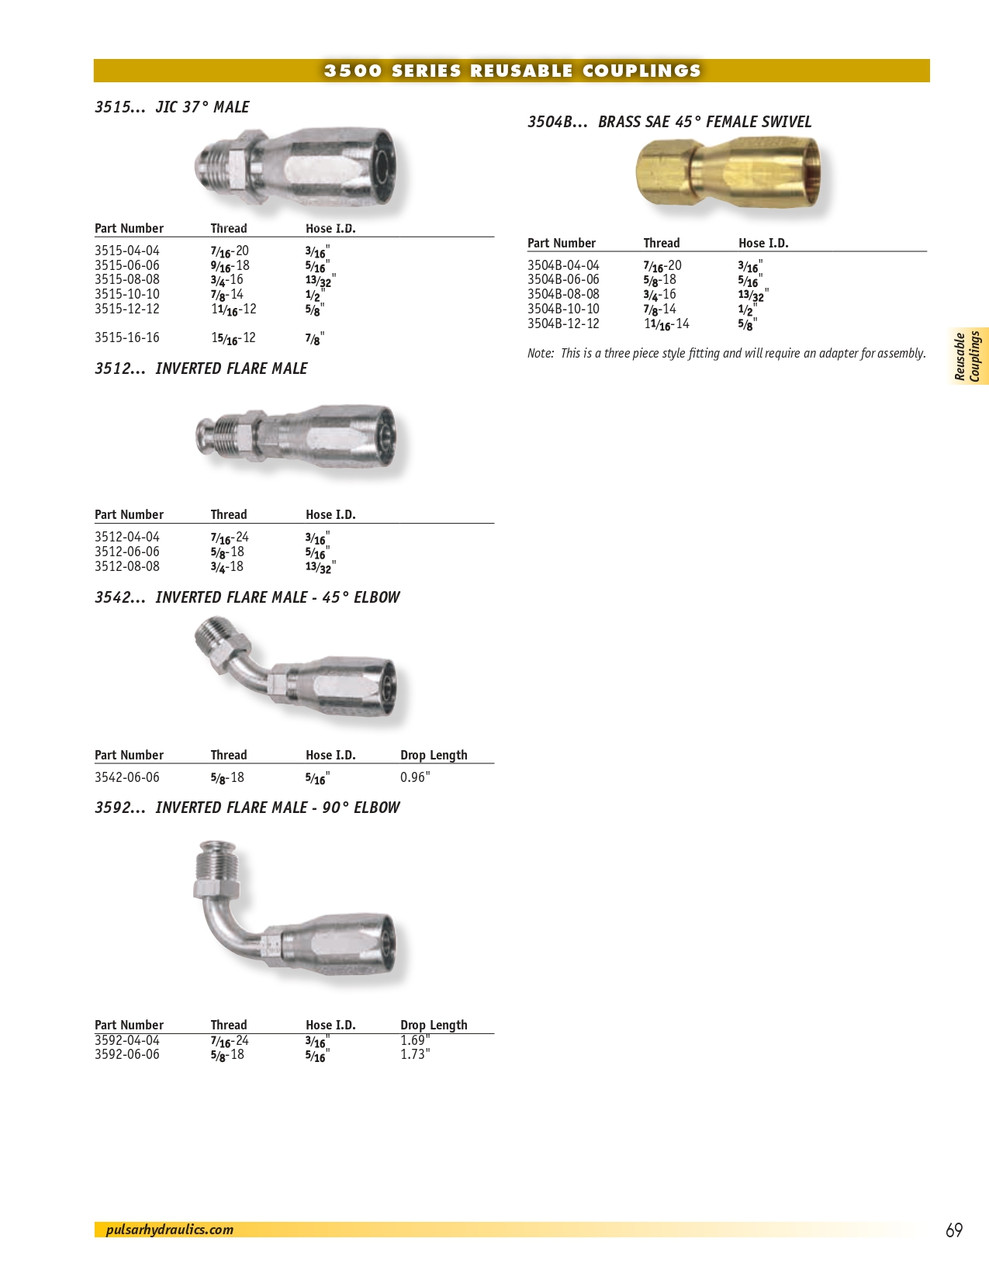 5/8 x 3/4" Pulsar Brass 3500 Series Reusable Hose End - Female 45° SAE Swivel  3504B-12-12